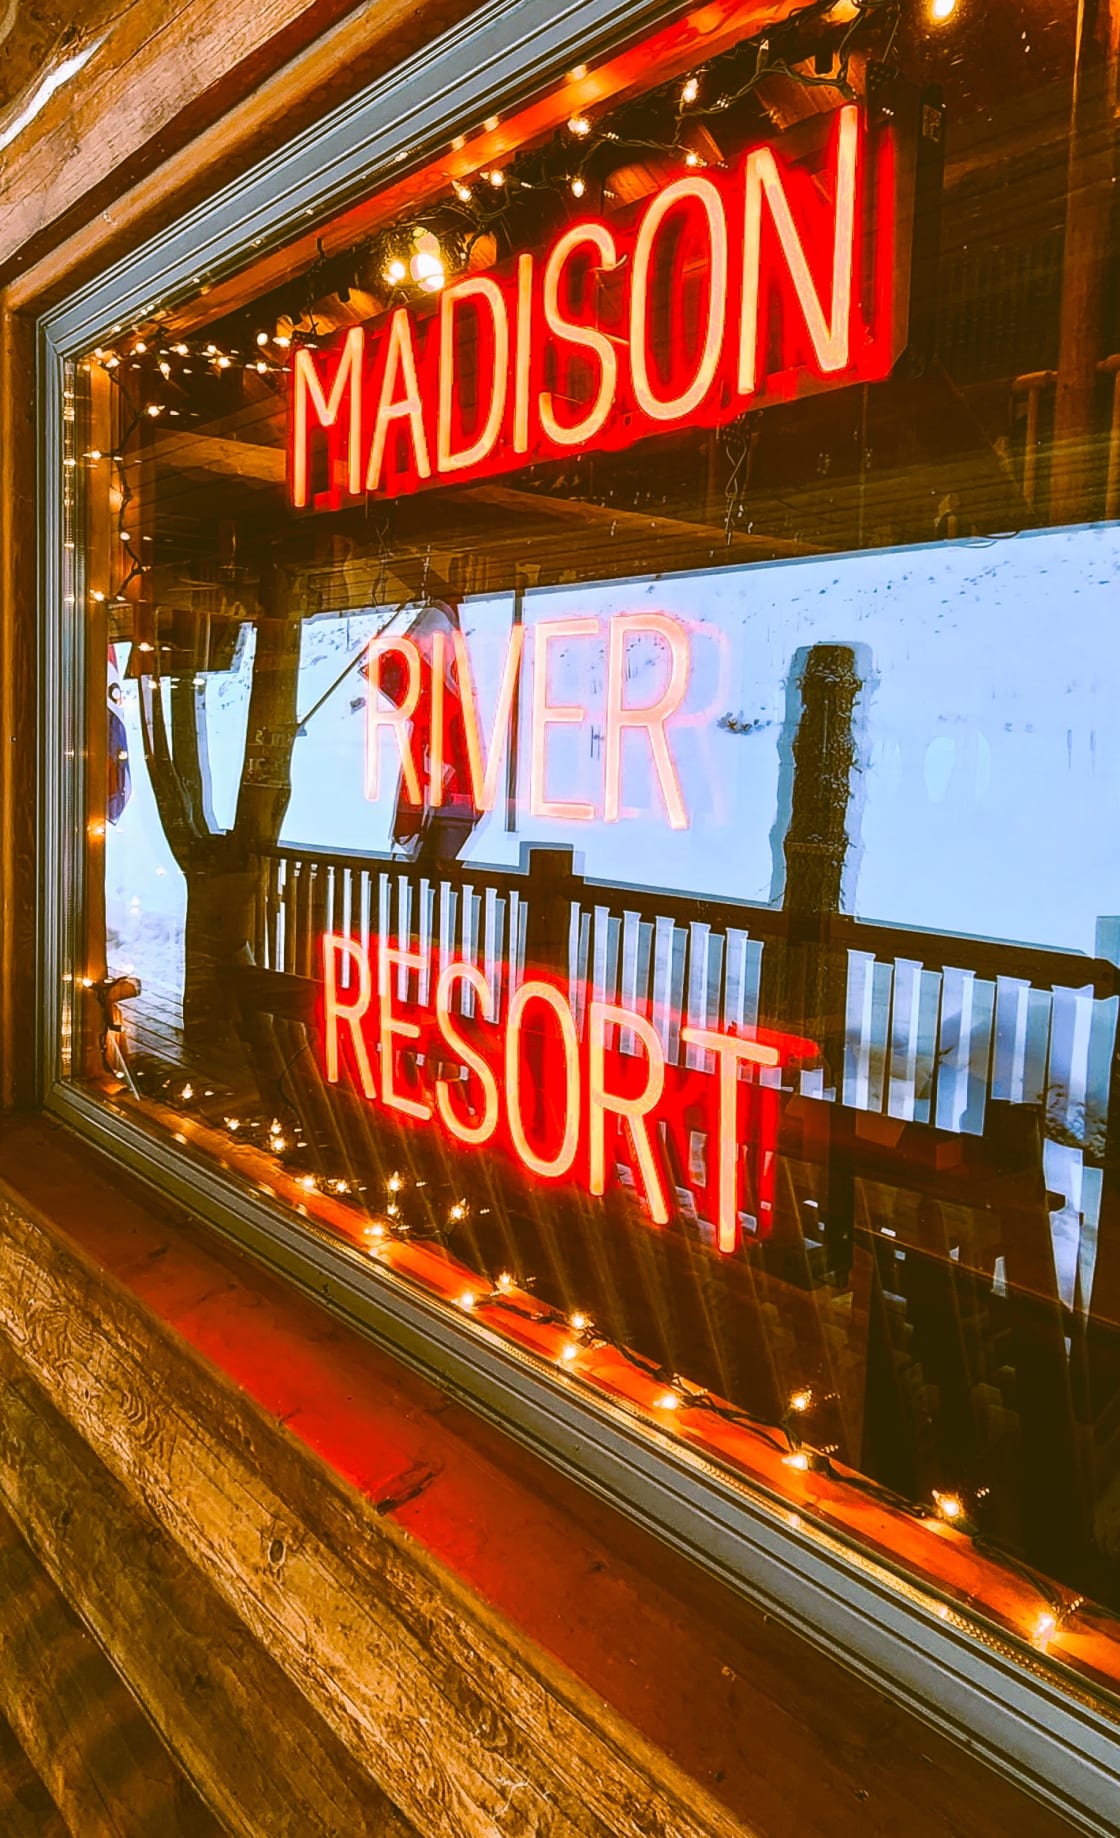 Madison River Resort